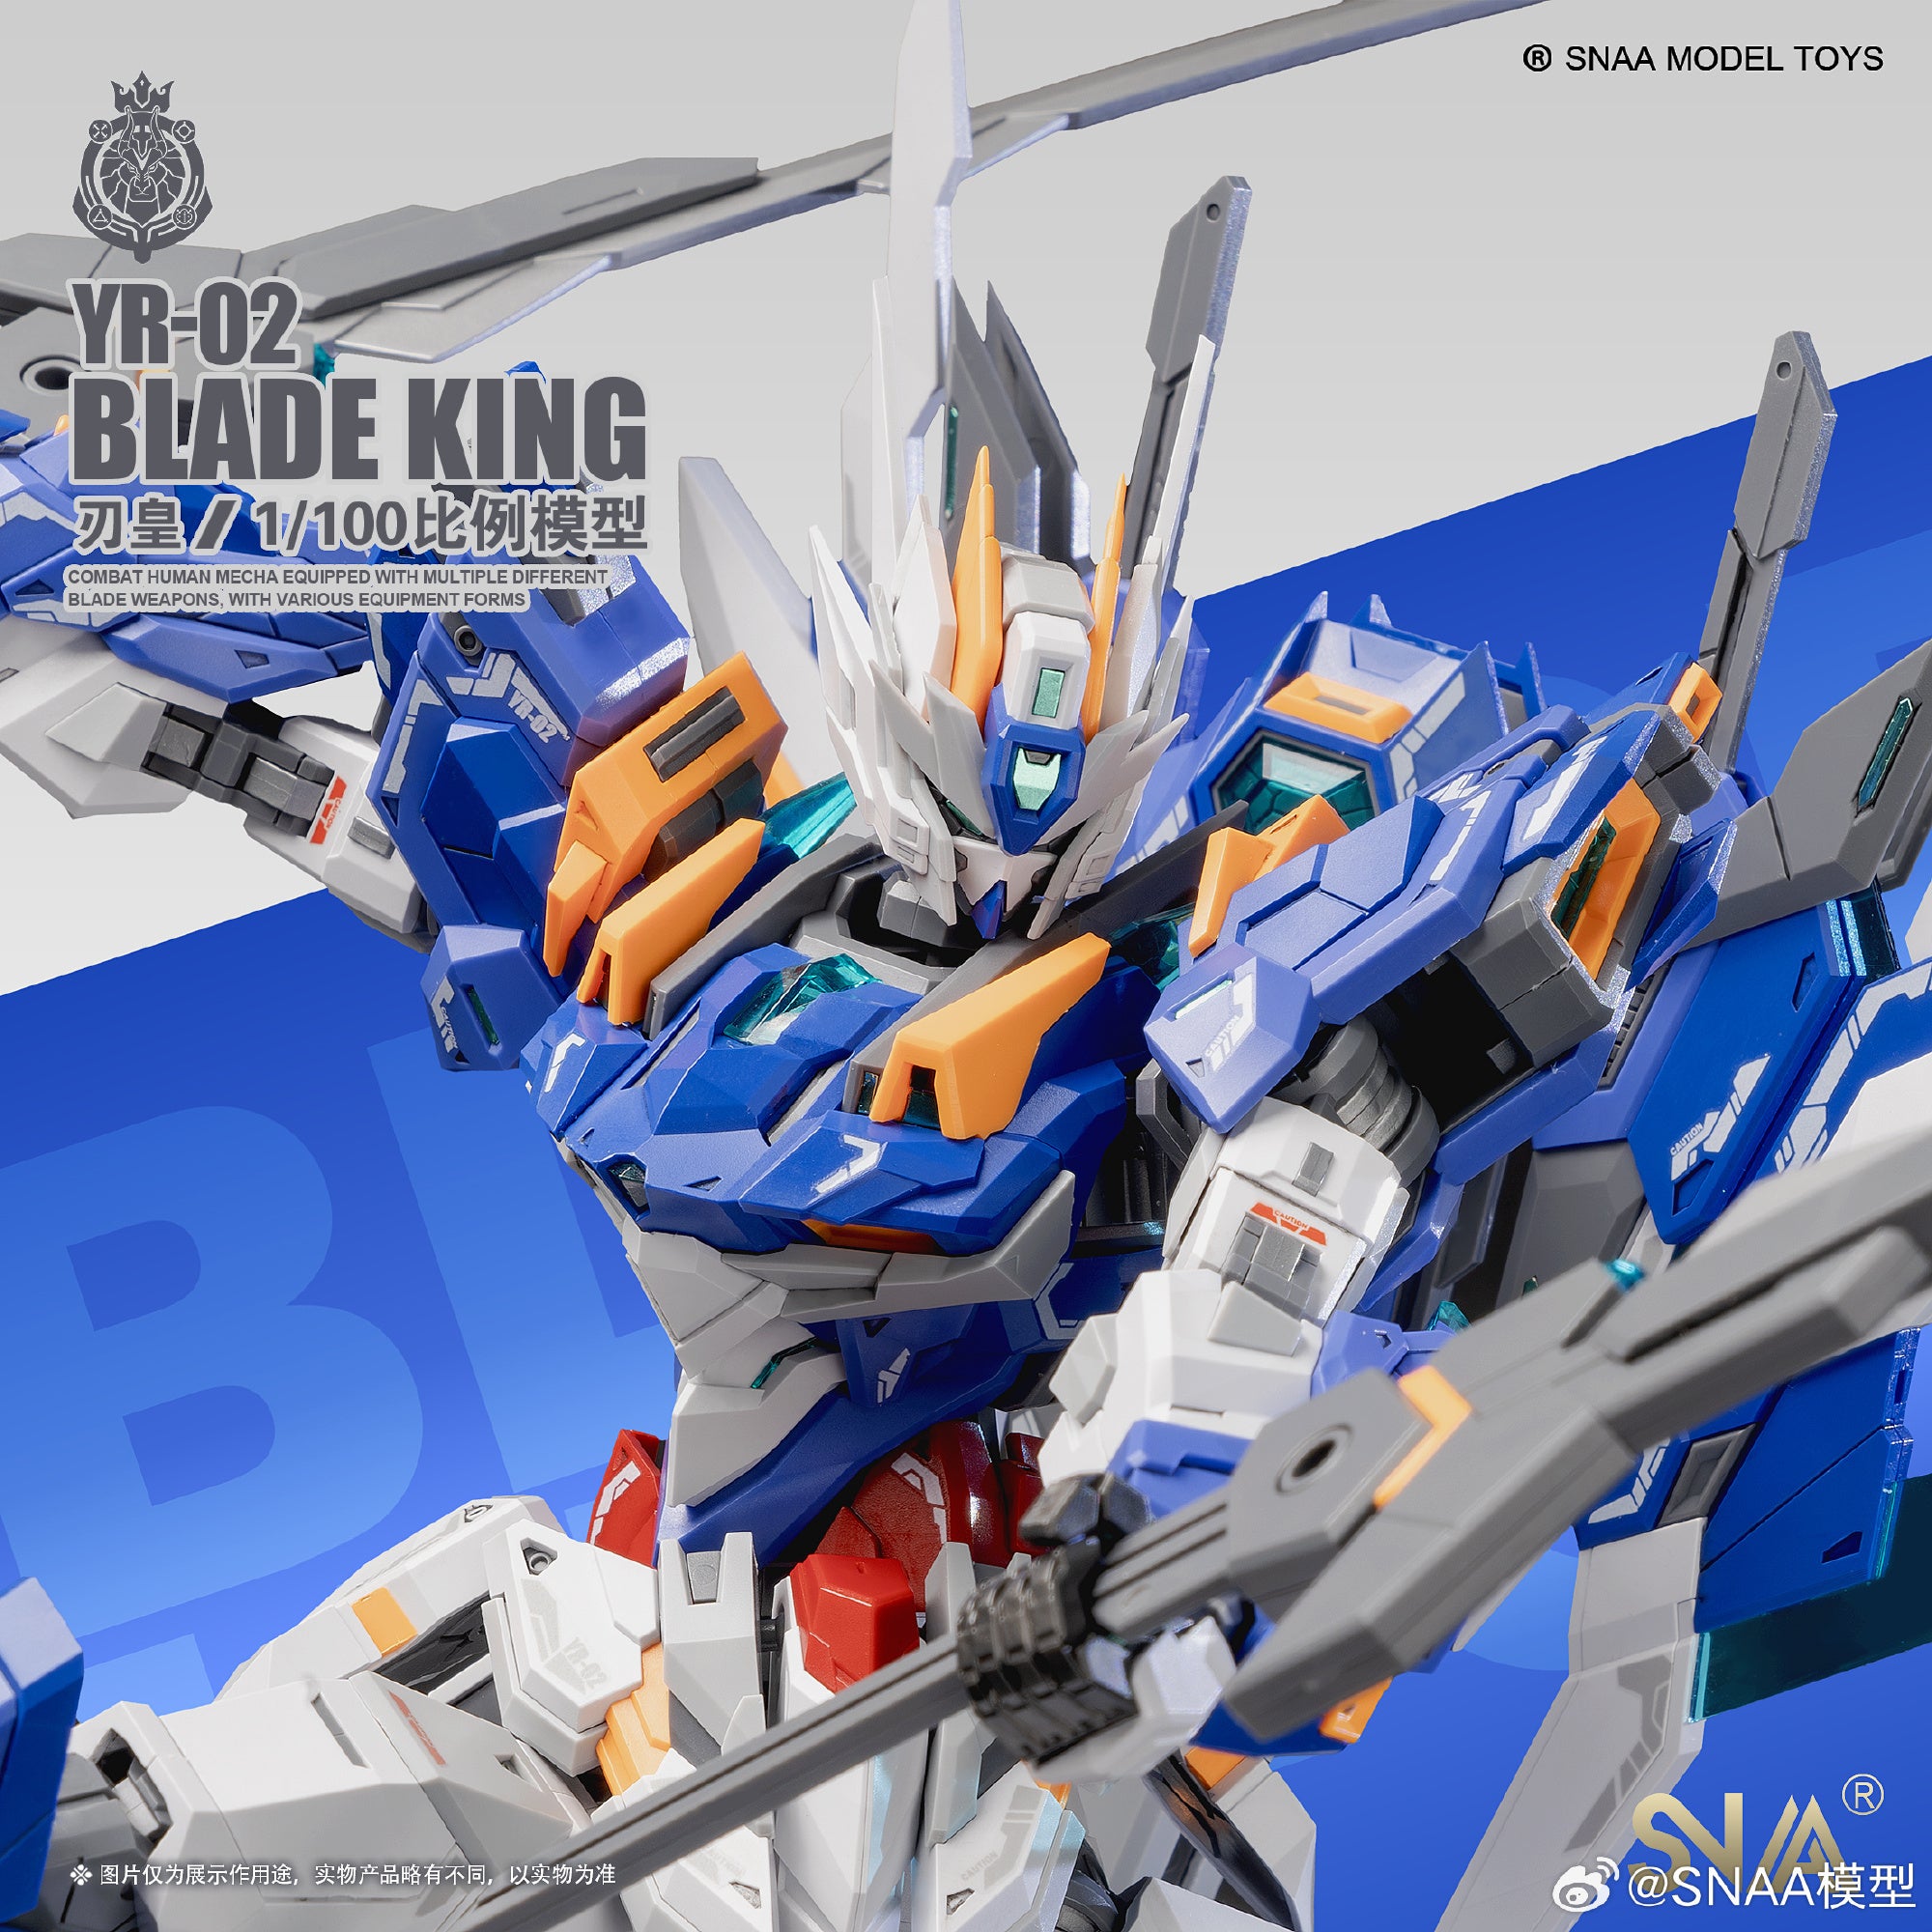 SNAA 1/100 Blade King Plastic Model Action Toy Kit VCA Gundam Singapore